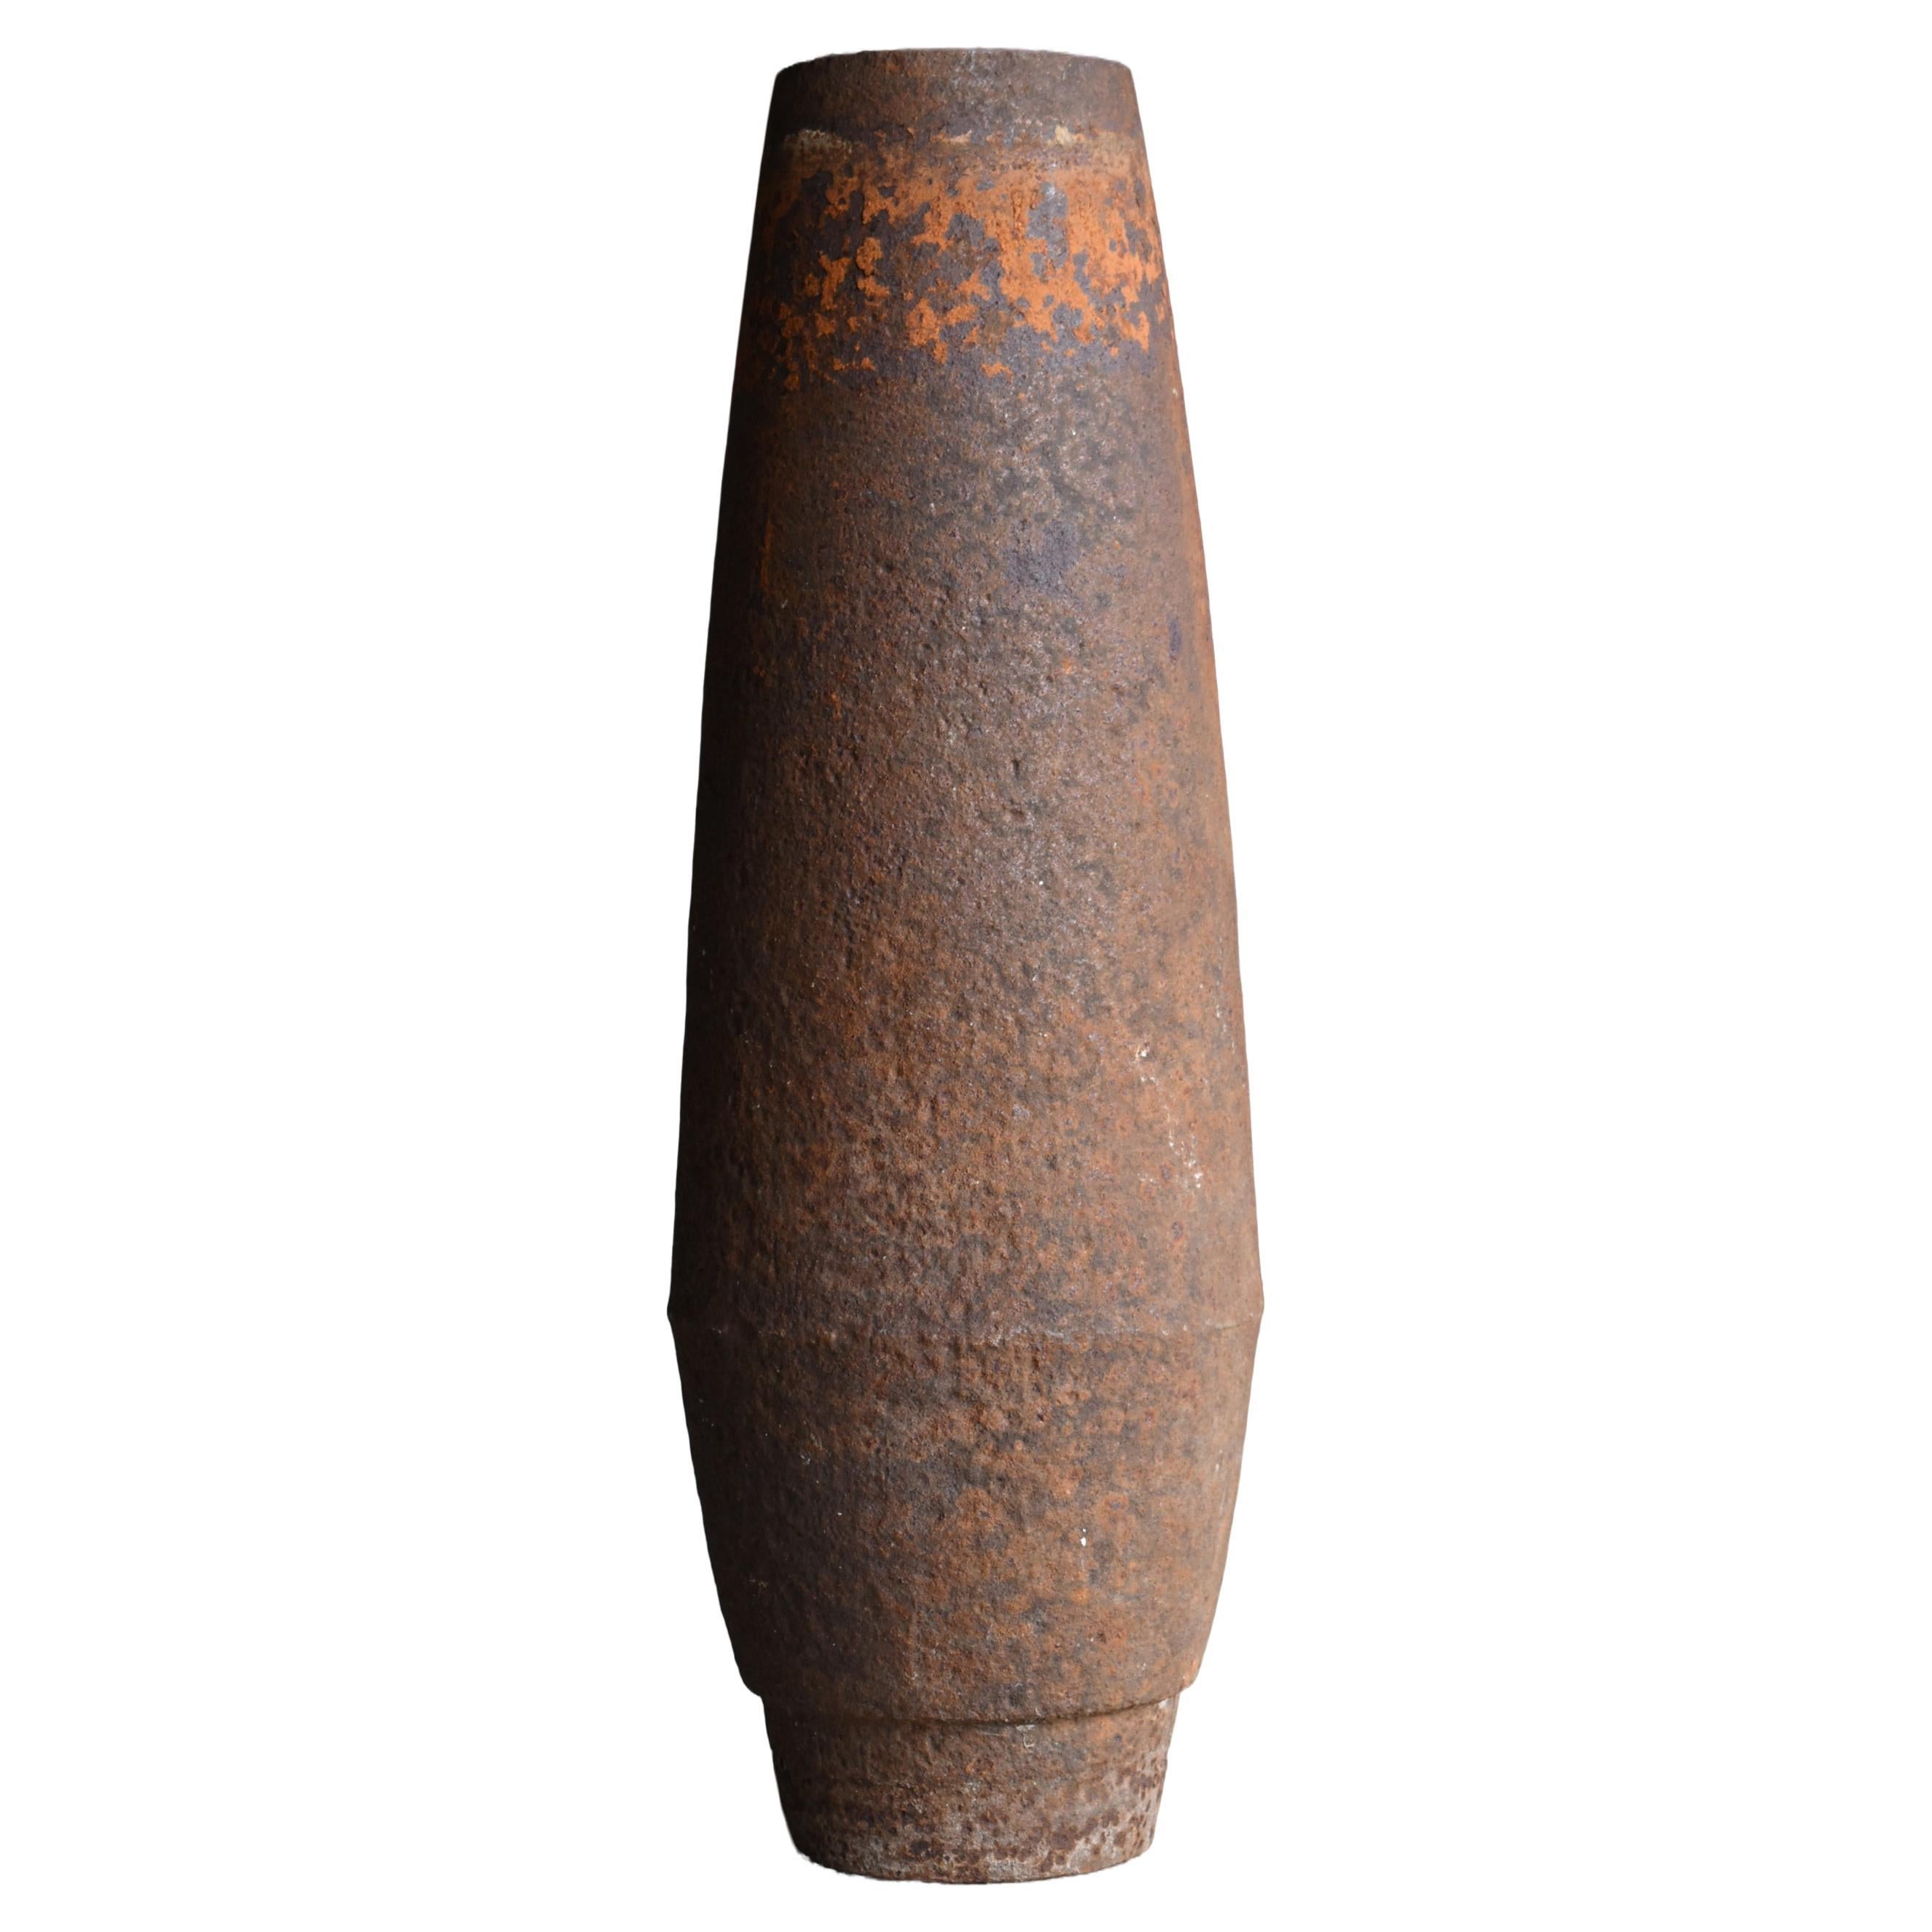 Antique Iron Shell 1920s-1940s / Flower Vase Object Wabisabi